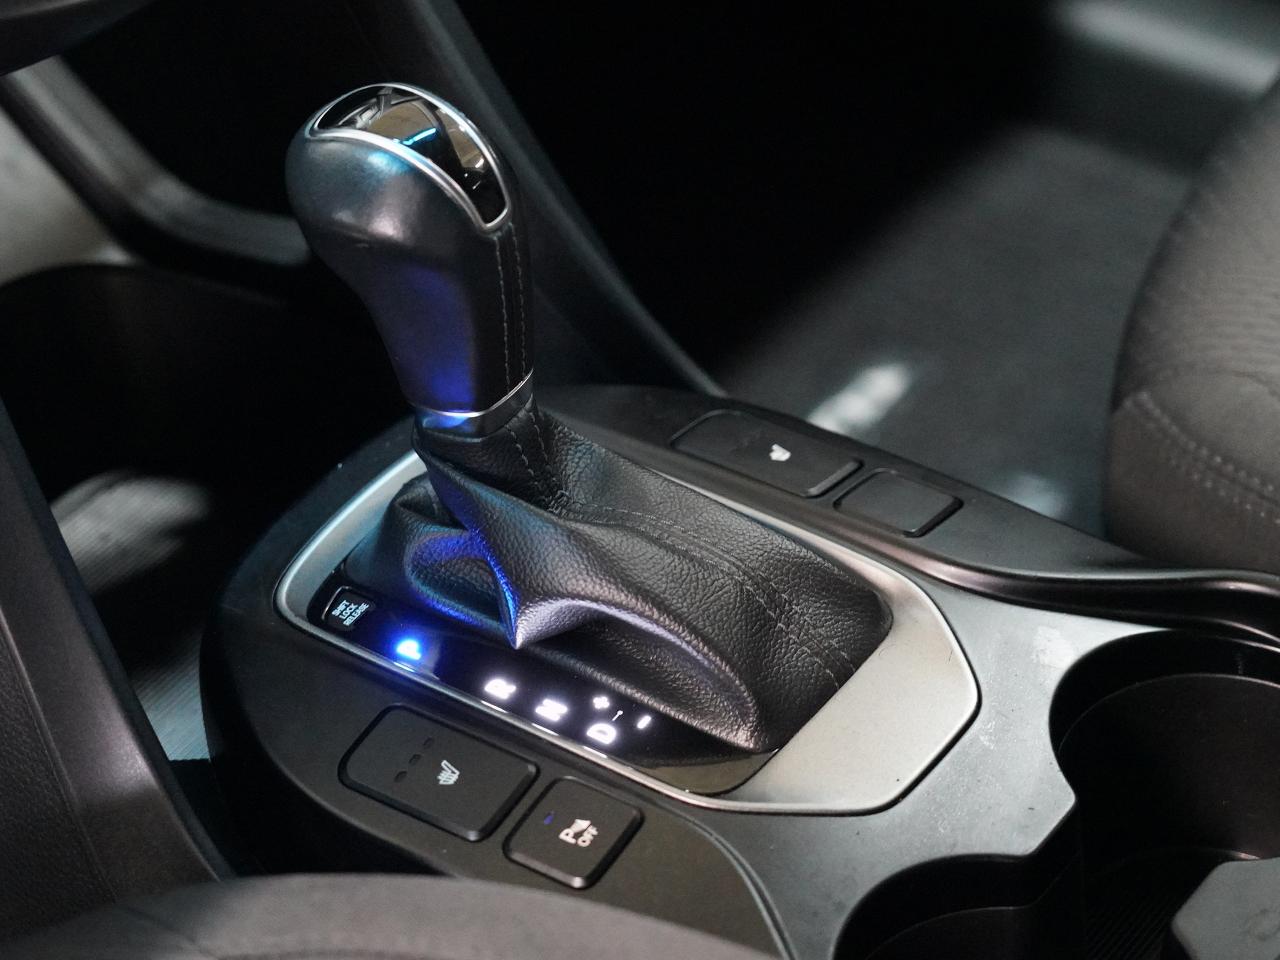 2018 Hyundai Santa Fe XL PREMIUM | AWD | 7 Pass | BSM | Heated Steering